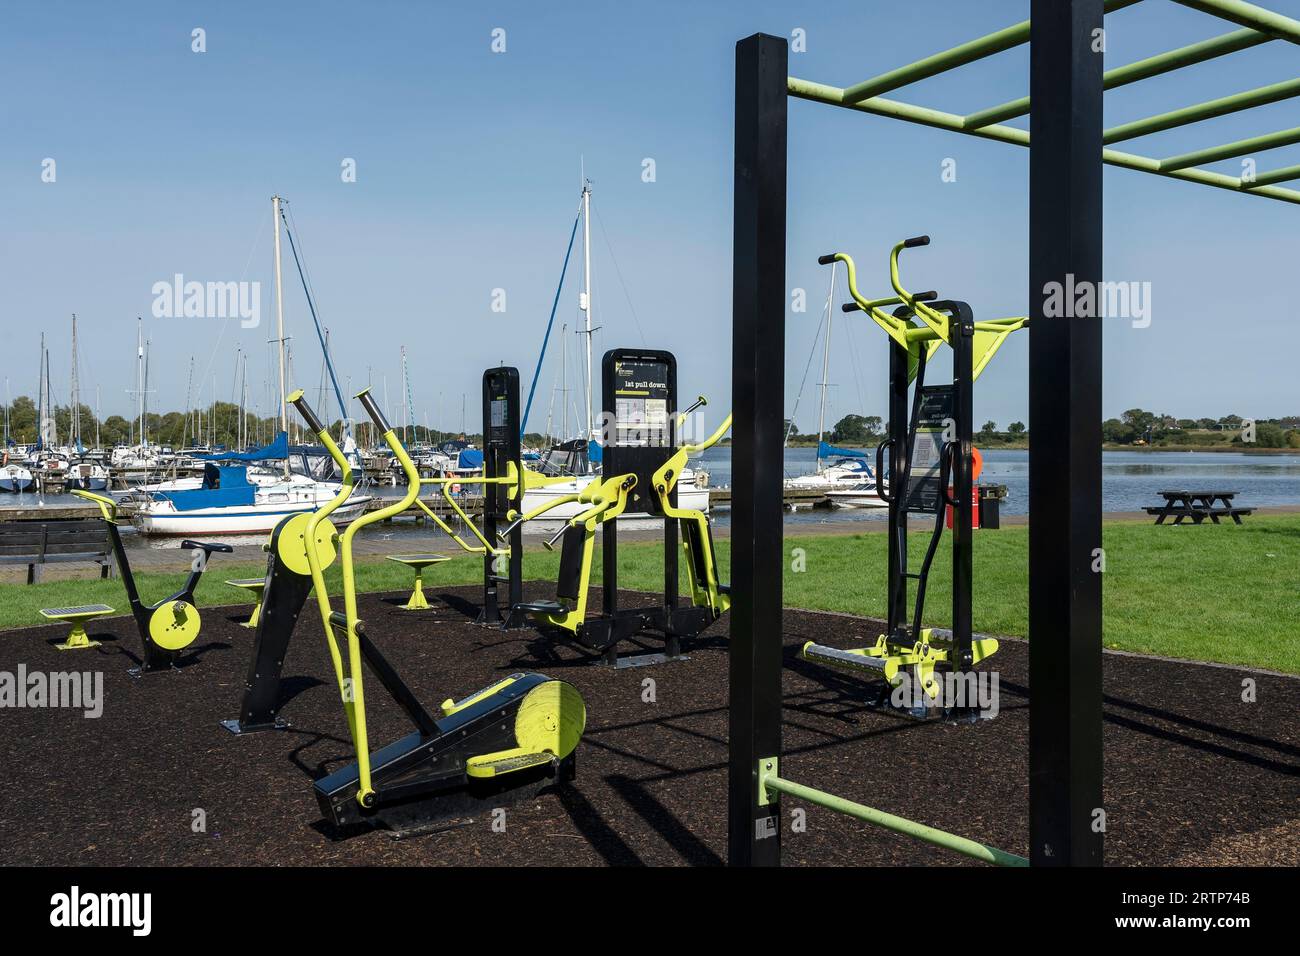 Kostenlose Nutzung der Outdoor-Trainingsgeräte im Kinnego Marina Lough Neagh Northern Ireland UK Stockfoto